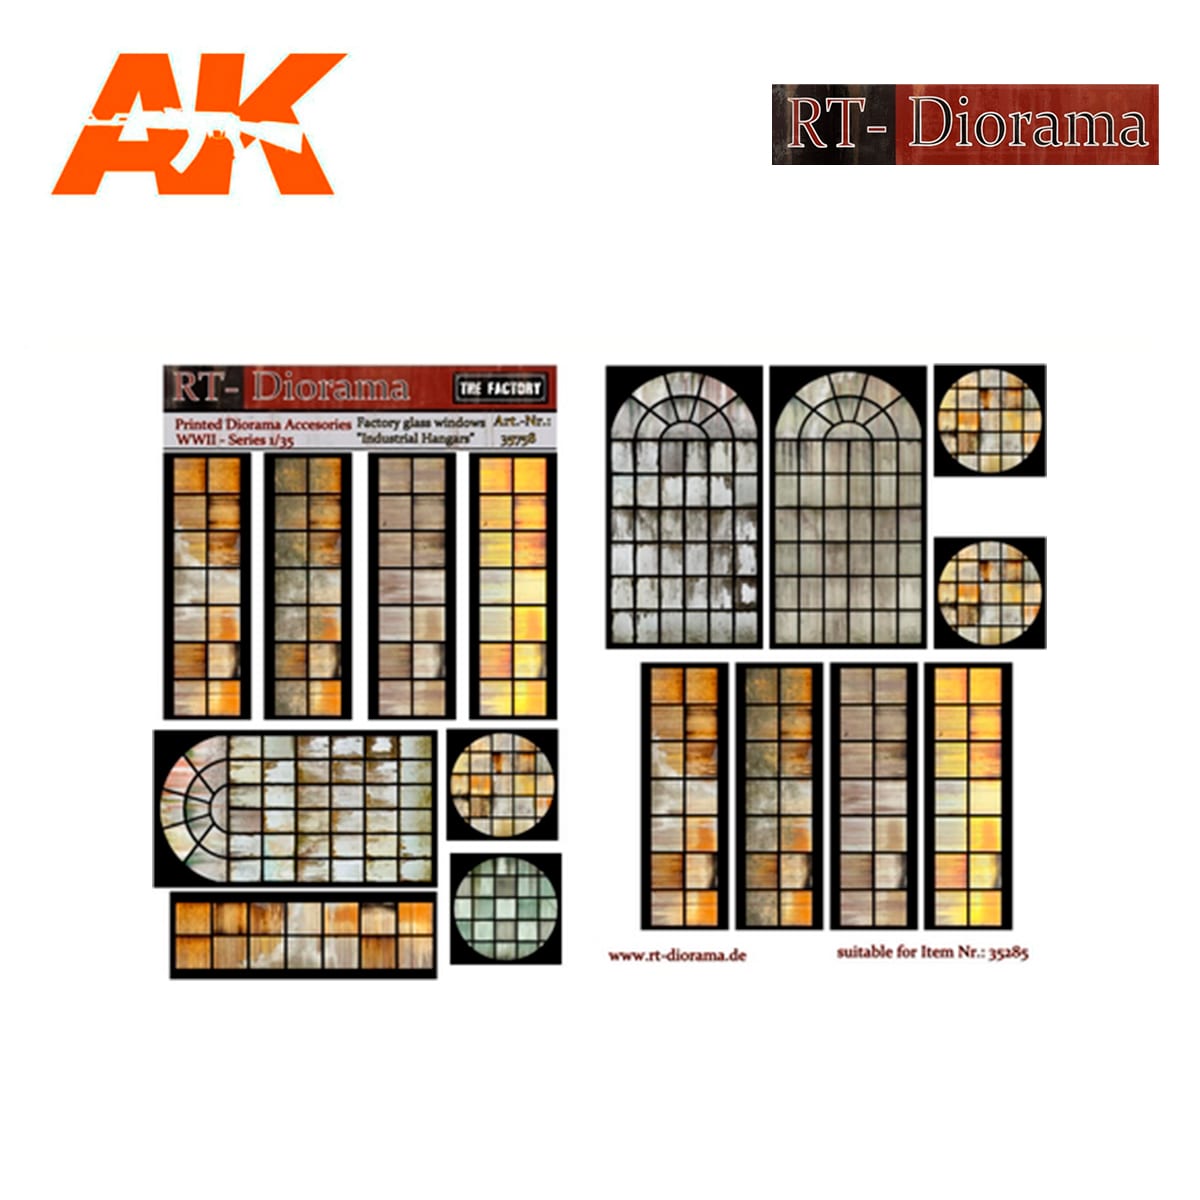 Printed Accesories: Factory glass windows «Industrial Hangars»